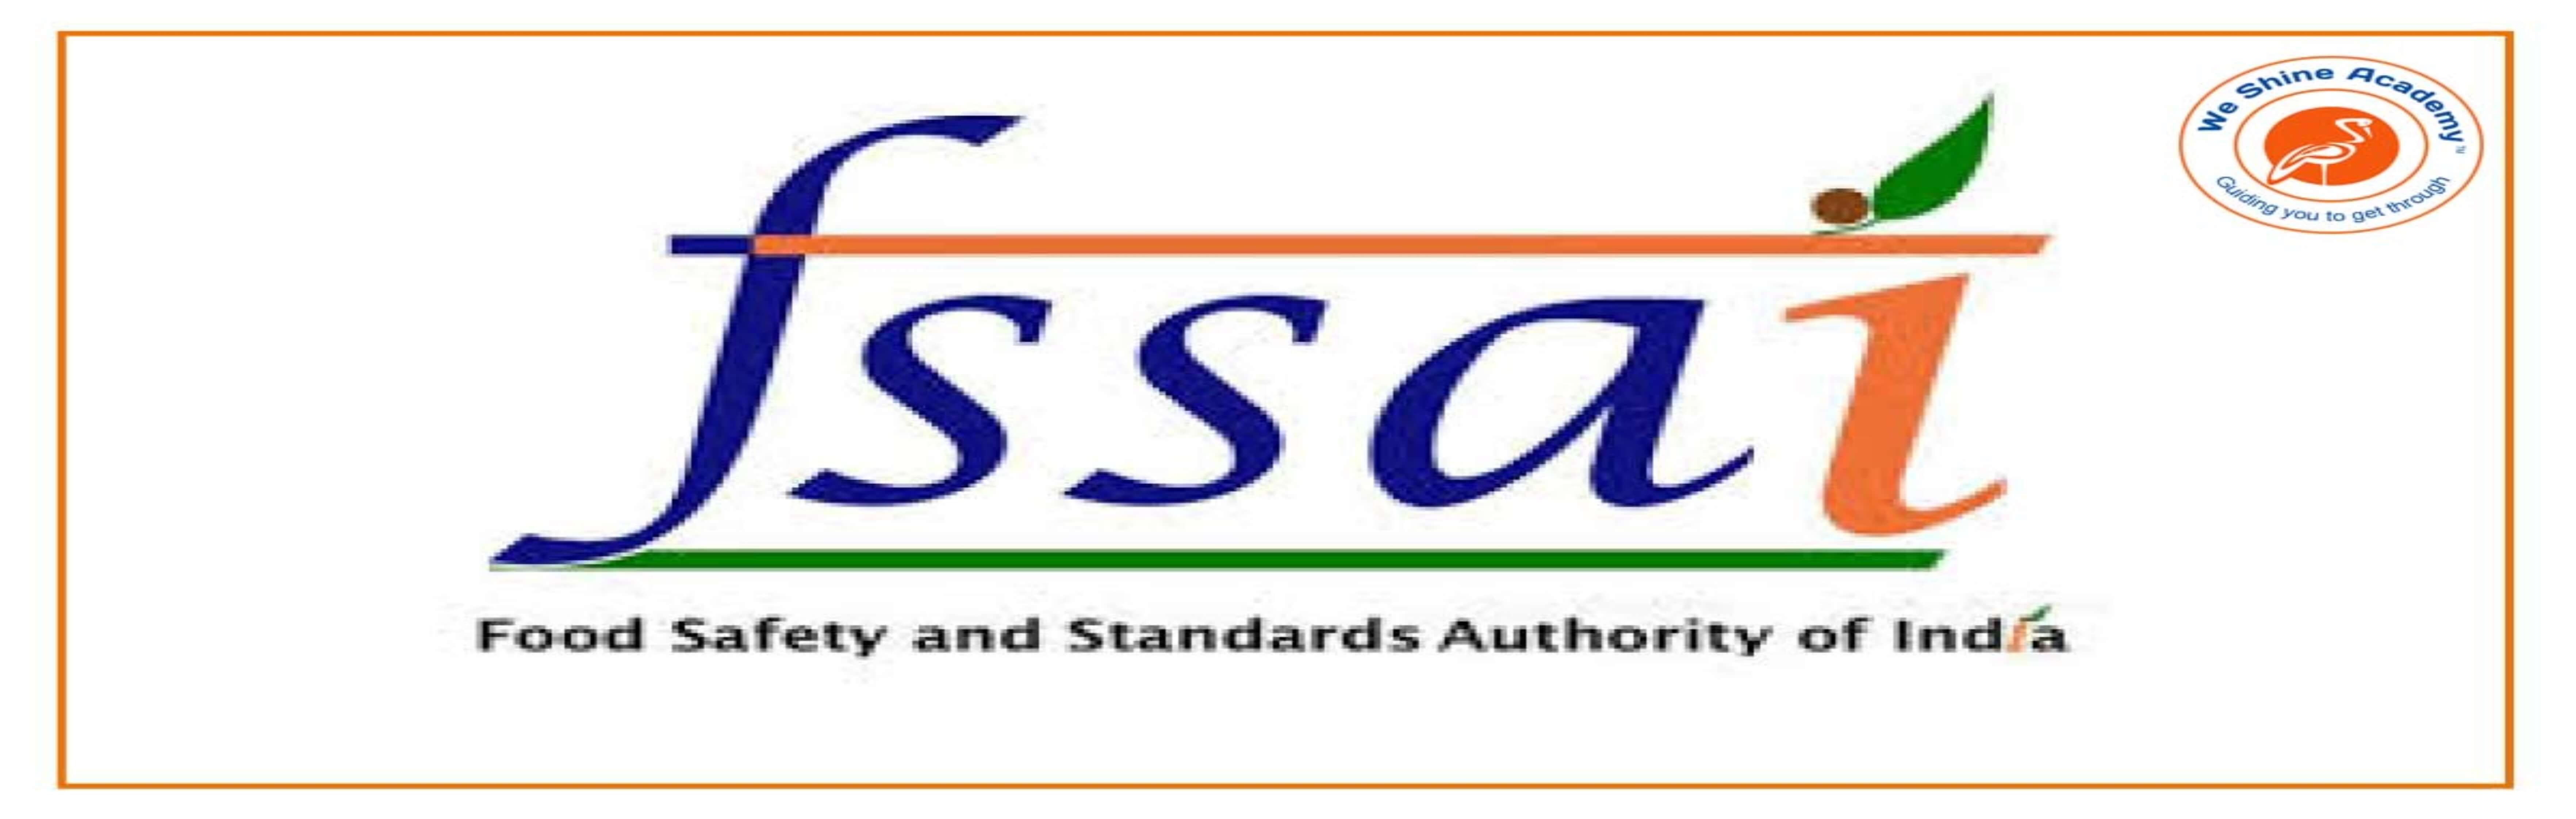 FSSAI Administrative Officer Recruitment 2020 TNPSC Coaching Centre